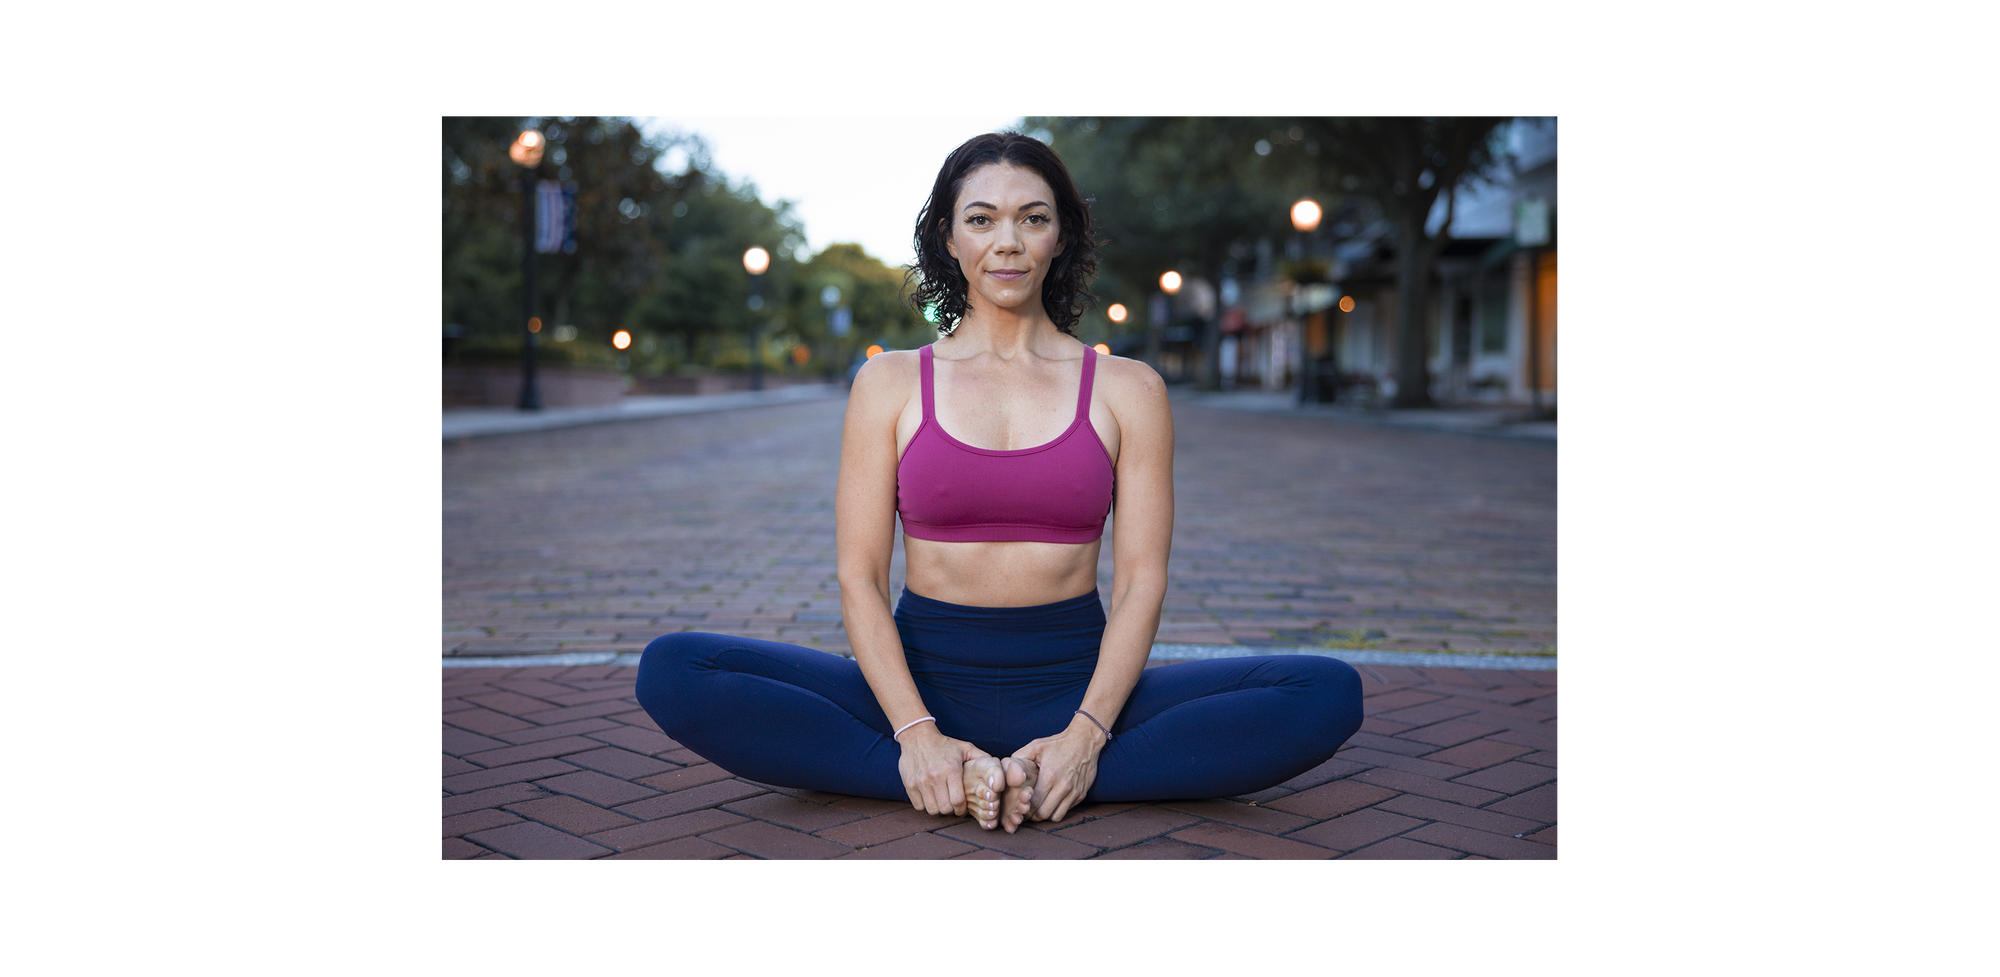 Achieve Greater Health and Wellness - The Yoga Shala